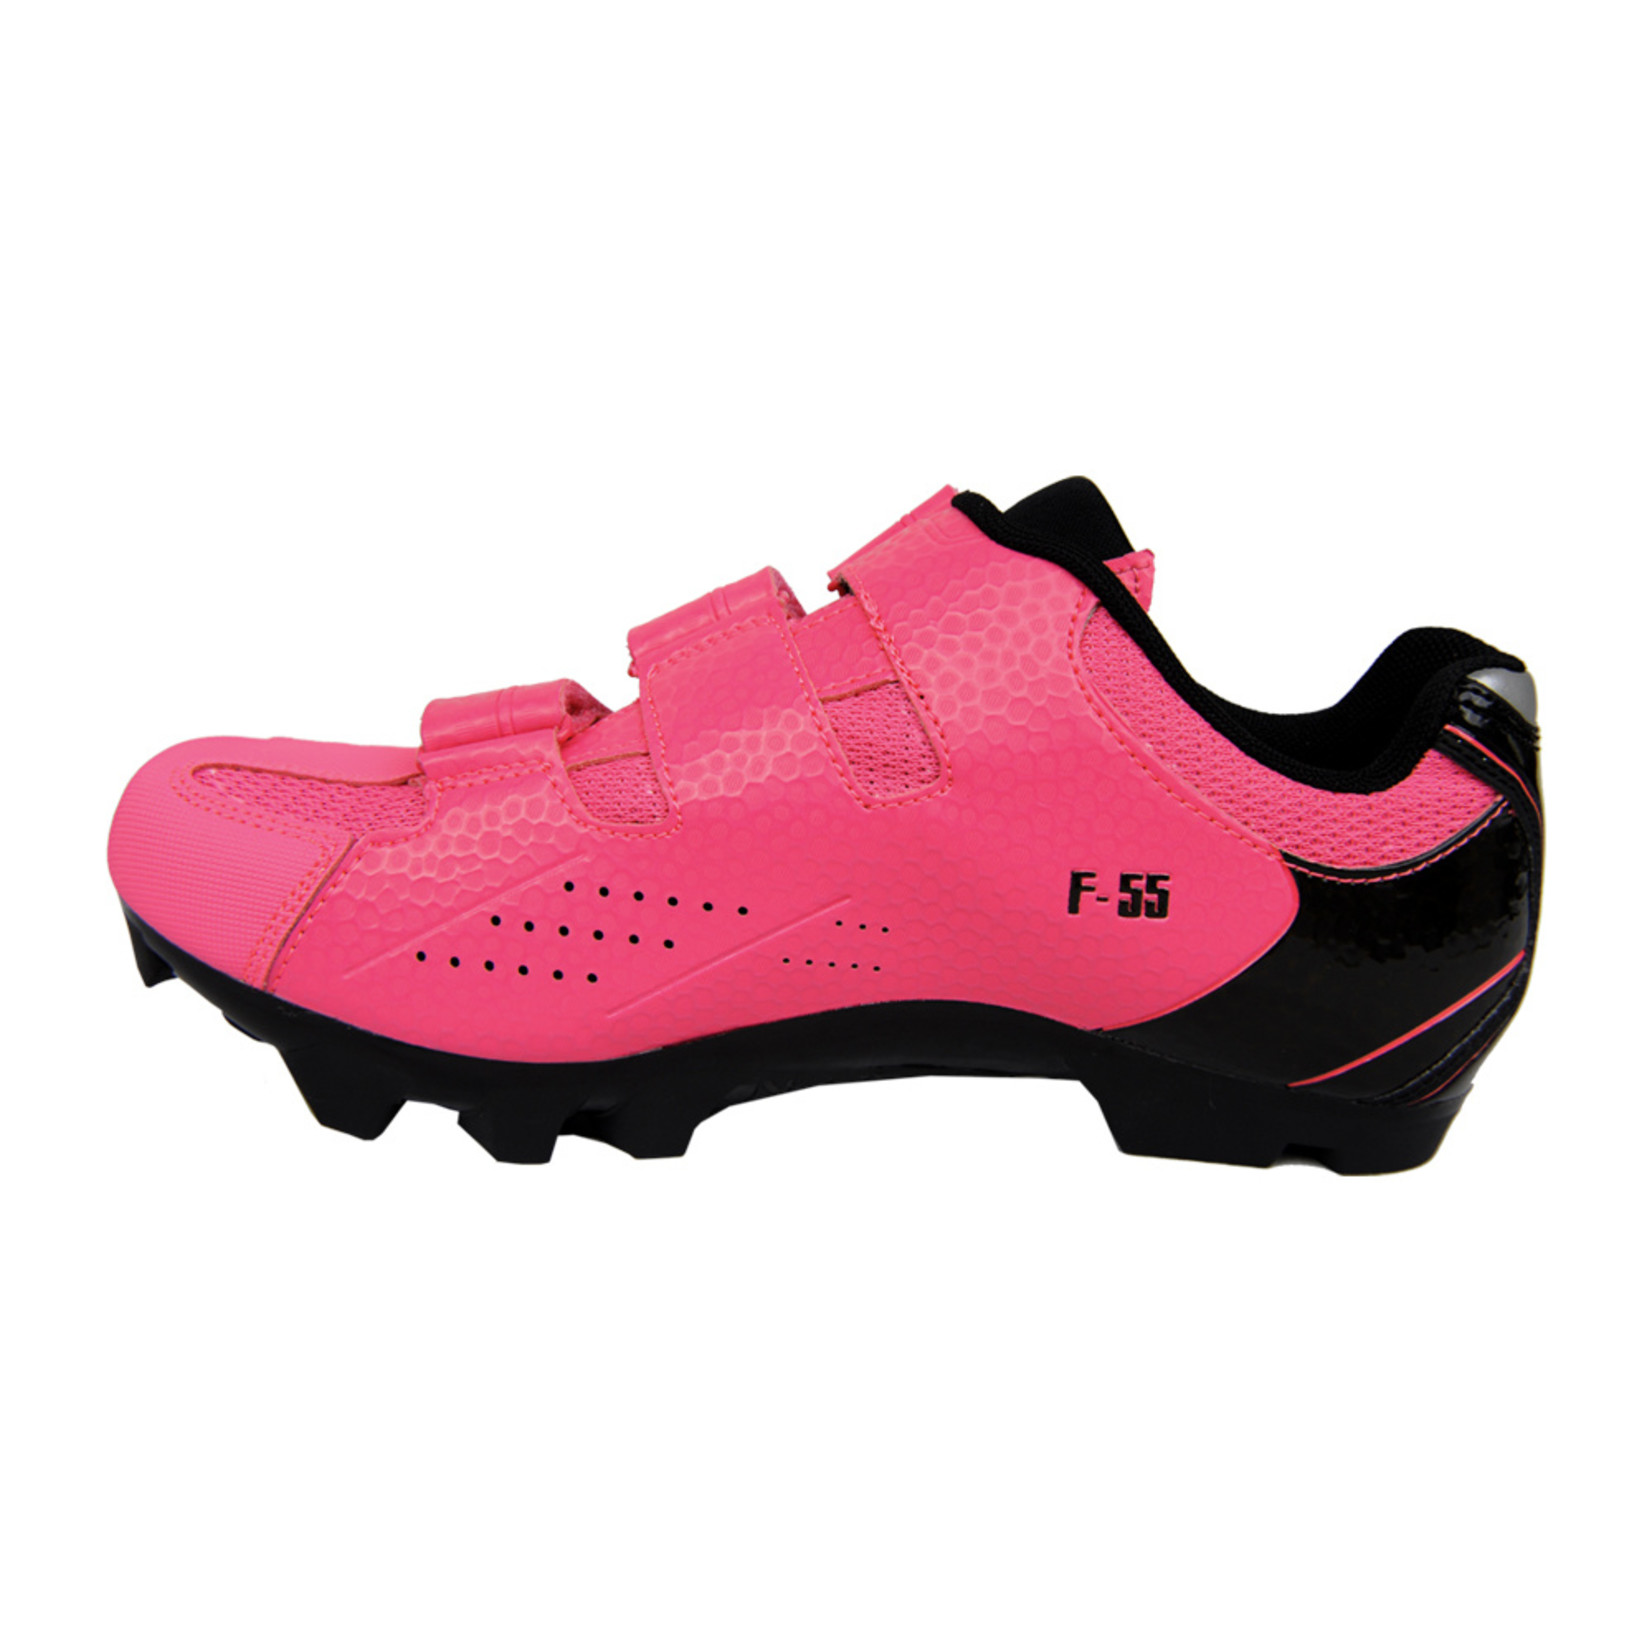 FLR FLR MTB Shoes - M250 Outsole - Laces - F-55-III - Size 40 - Black - Pink